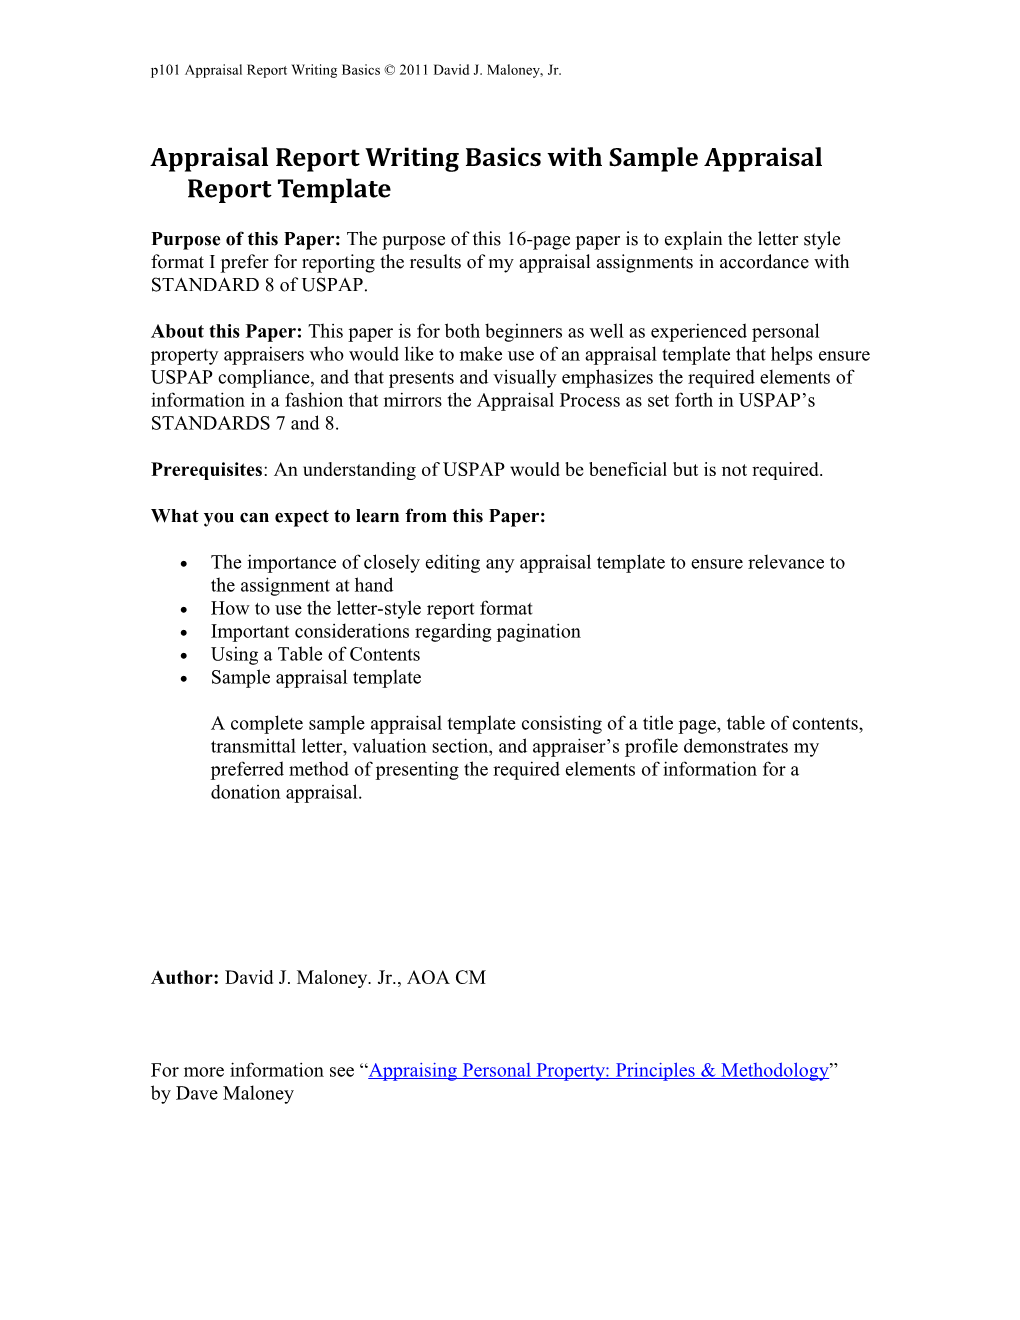 Appraisal Report Writing Basics with Sample Appraisalreport Template